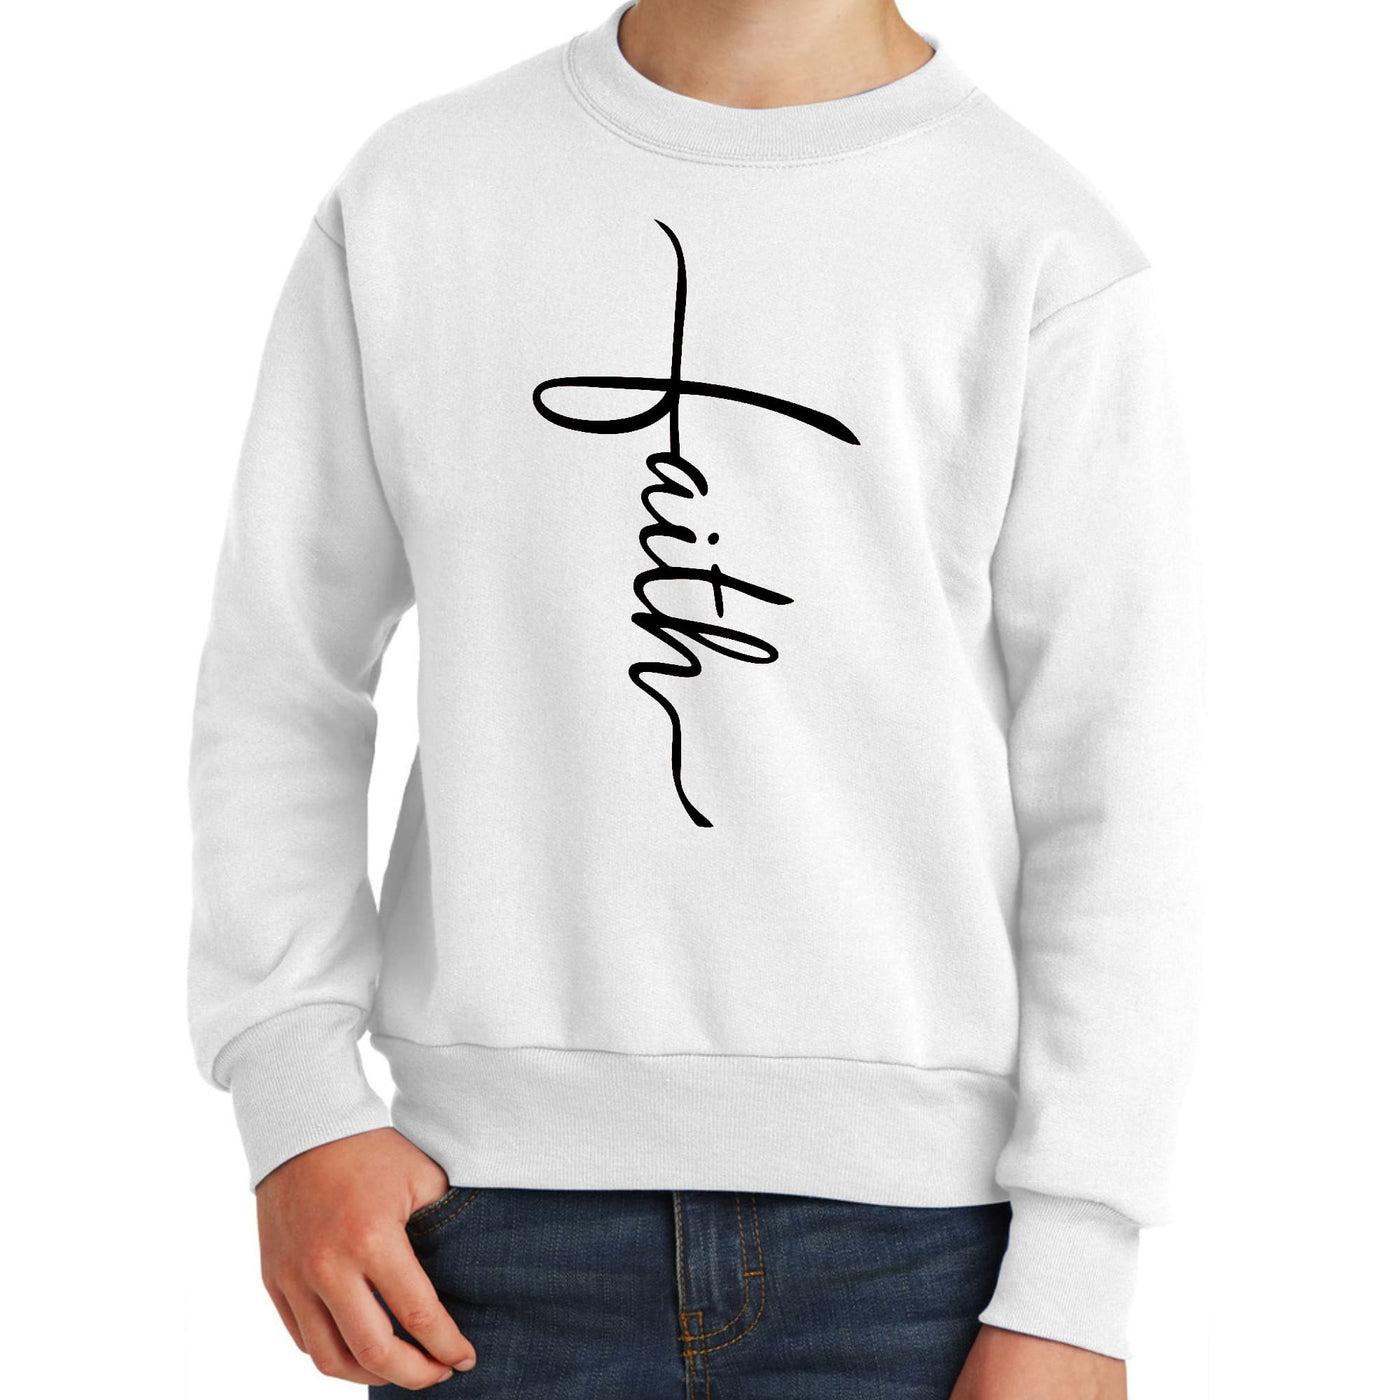 Youth Graphic Sweatshirt Faith Script Cross Black Illustration - Youth